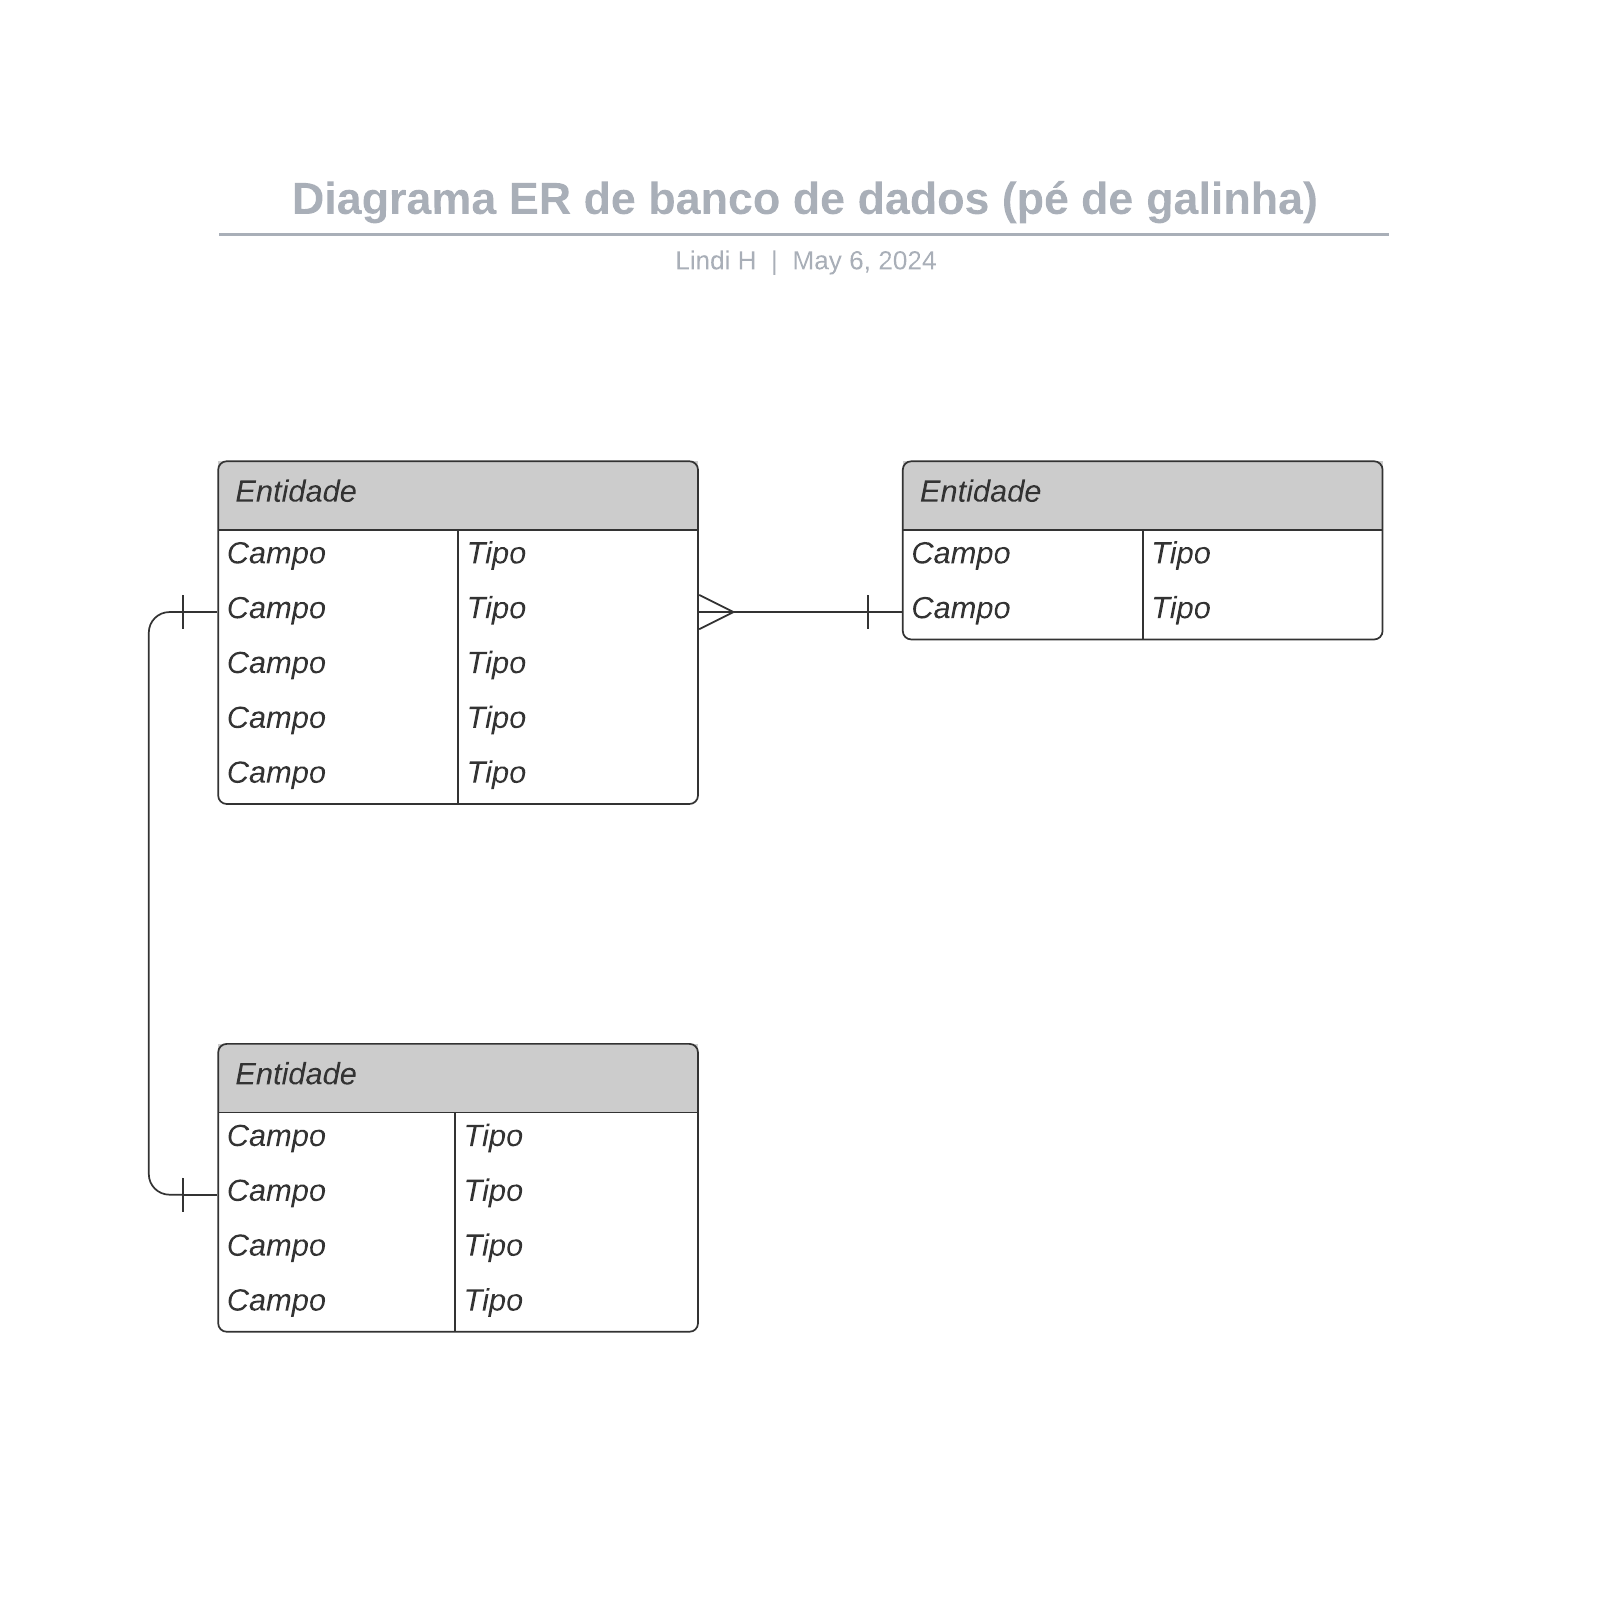 Diagrama ER de banco de dados (pé de galinha) example